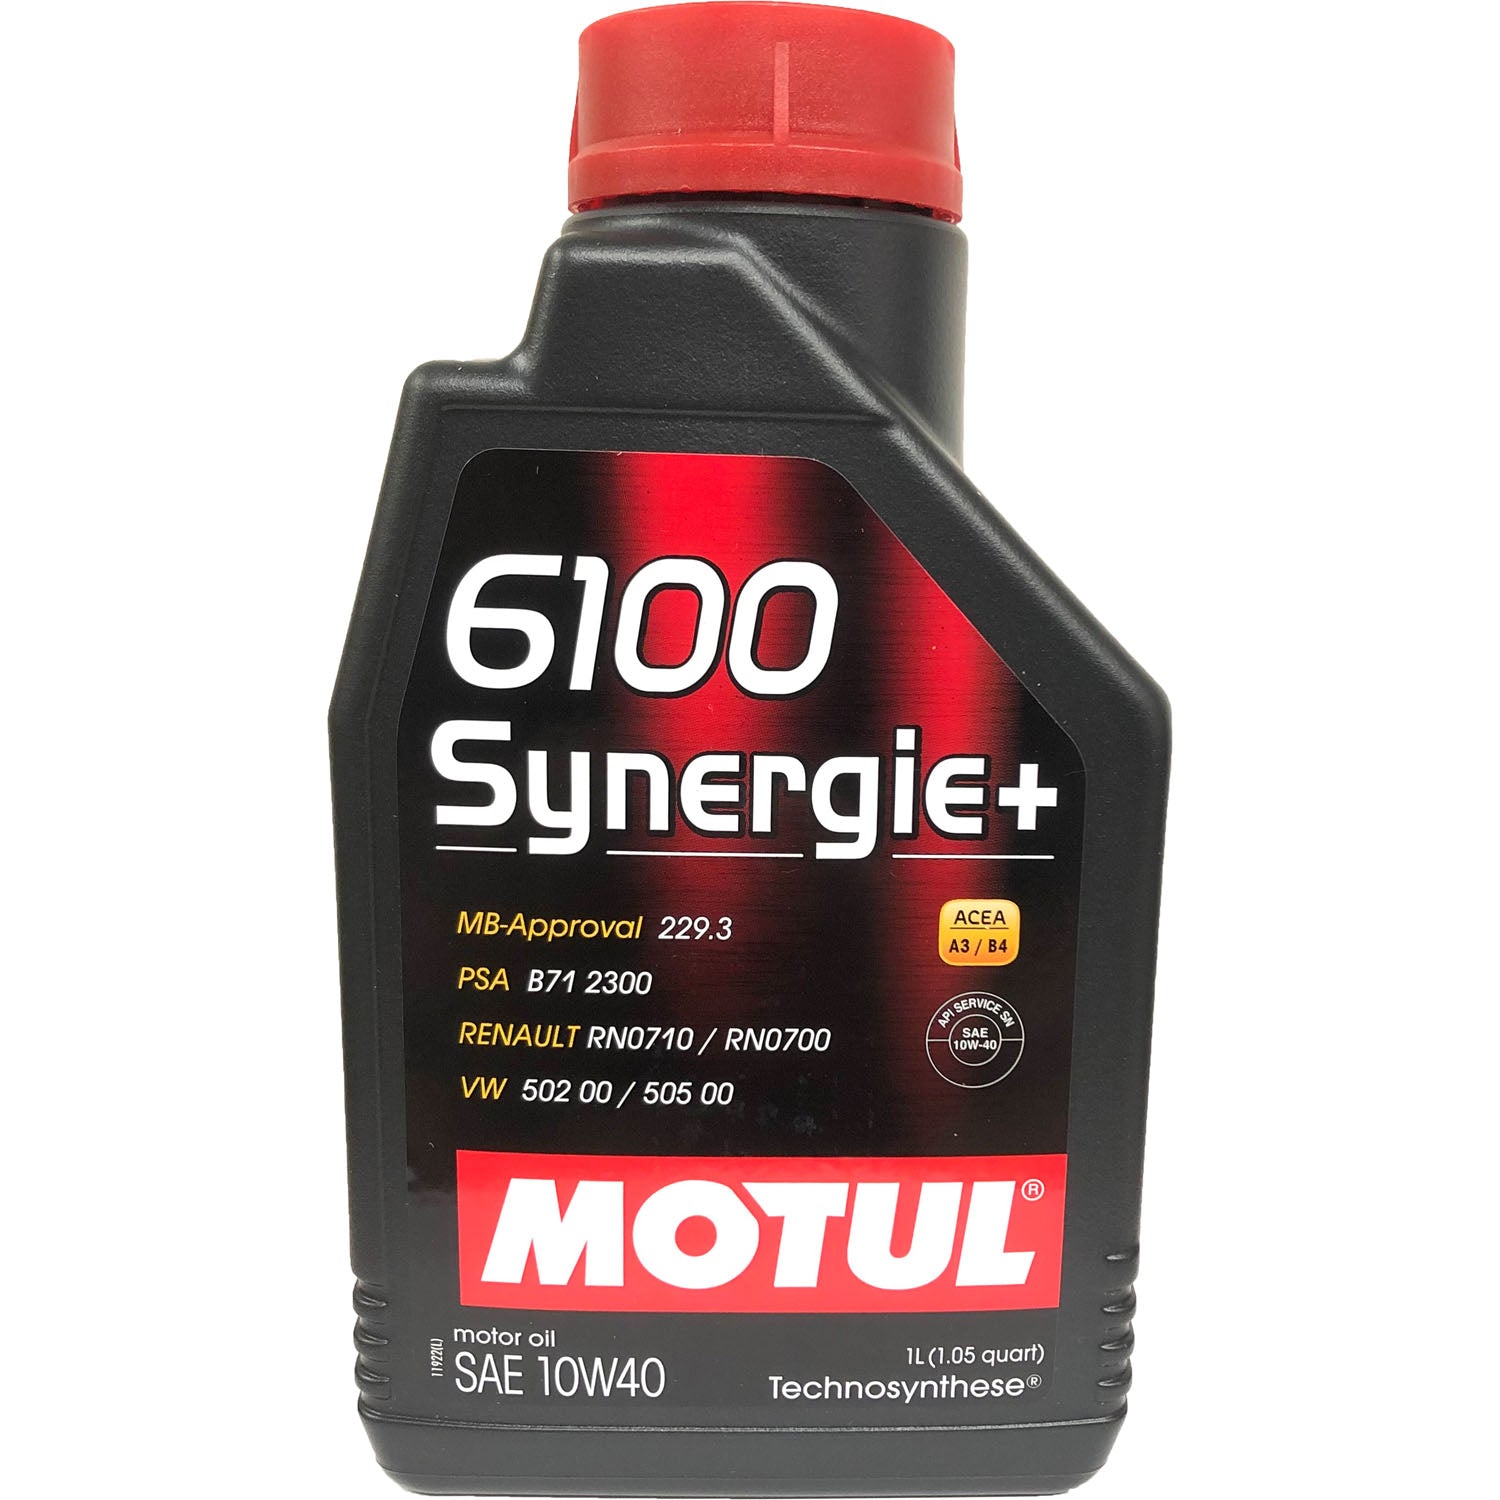 Motul 6100 Synergie+ Motor Oil 10W40 - 1 Liter